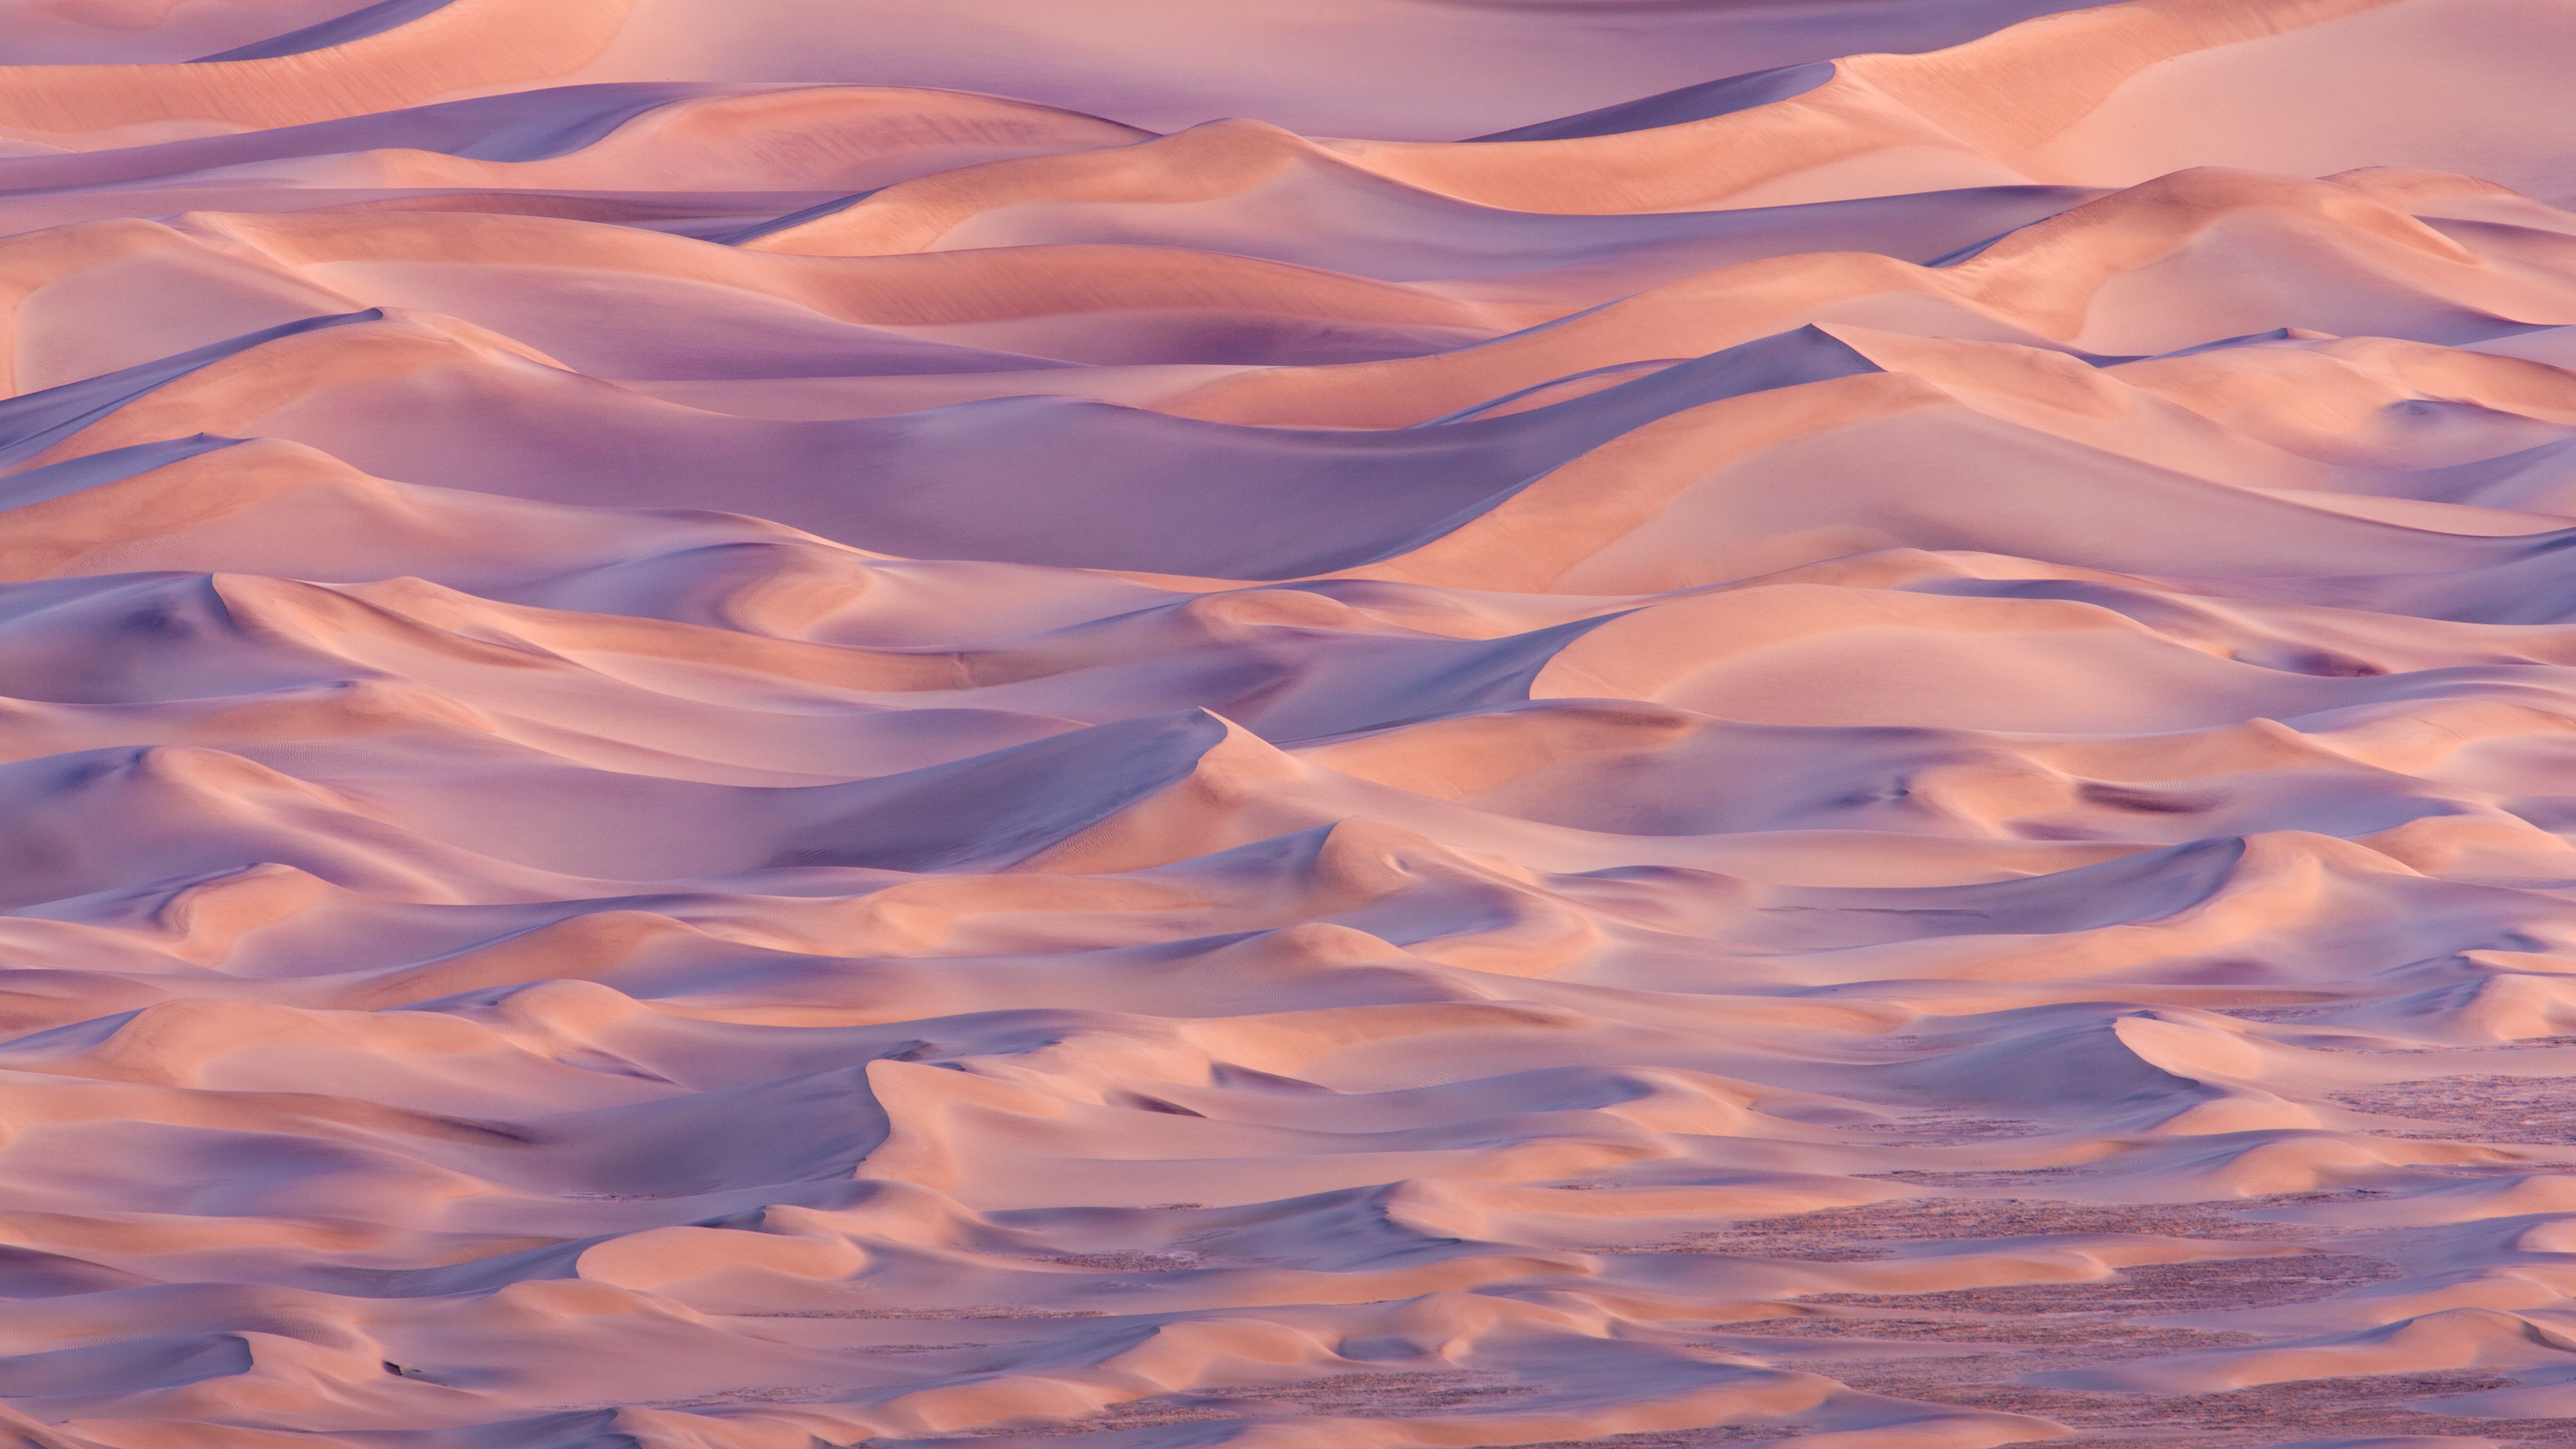  Sand Hintergrundbild 5120x2880. Desert Wallpaper 4K, Sand Dunes, OS X Mavericks, Stock